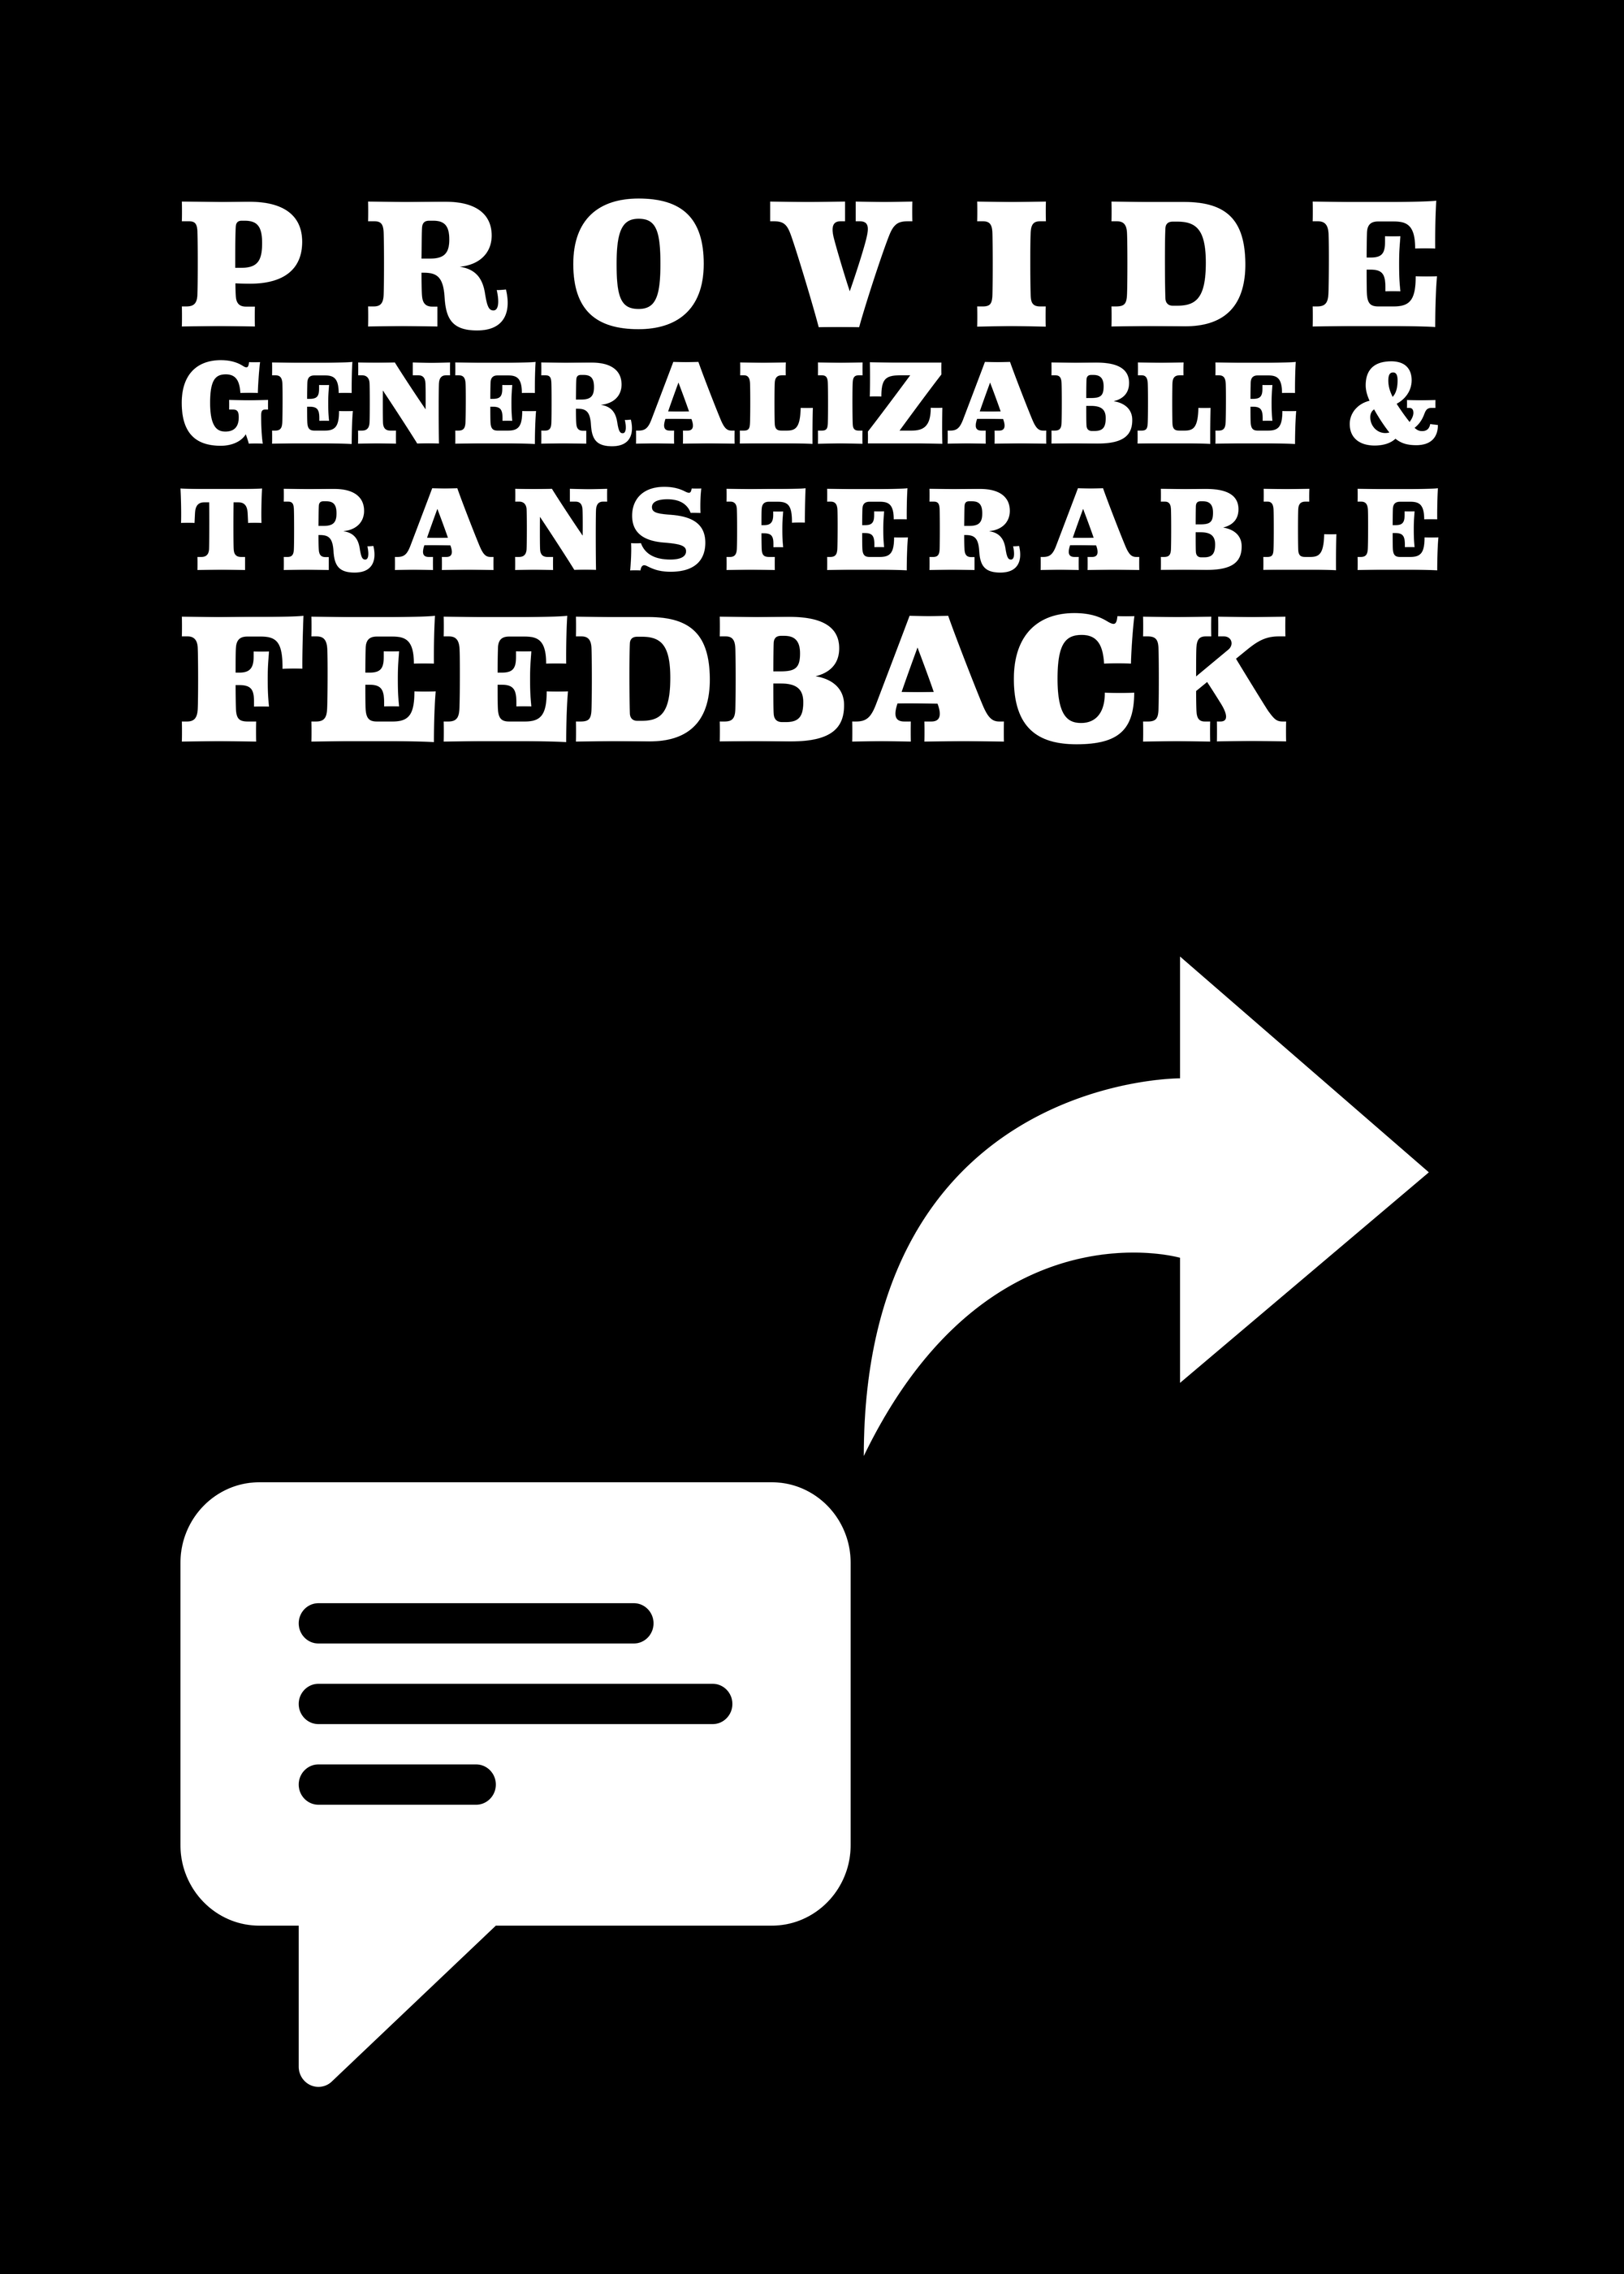 Provide generalizable and transferable feedback